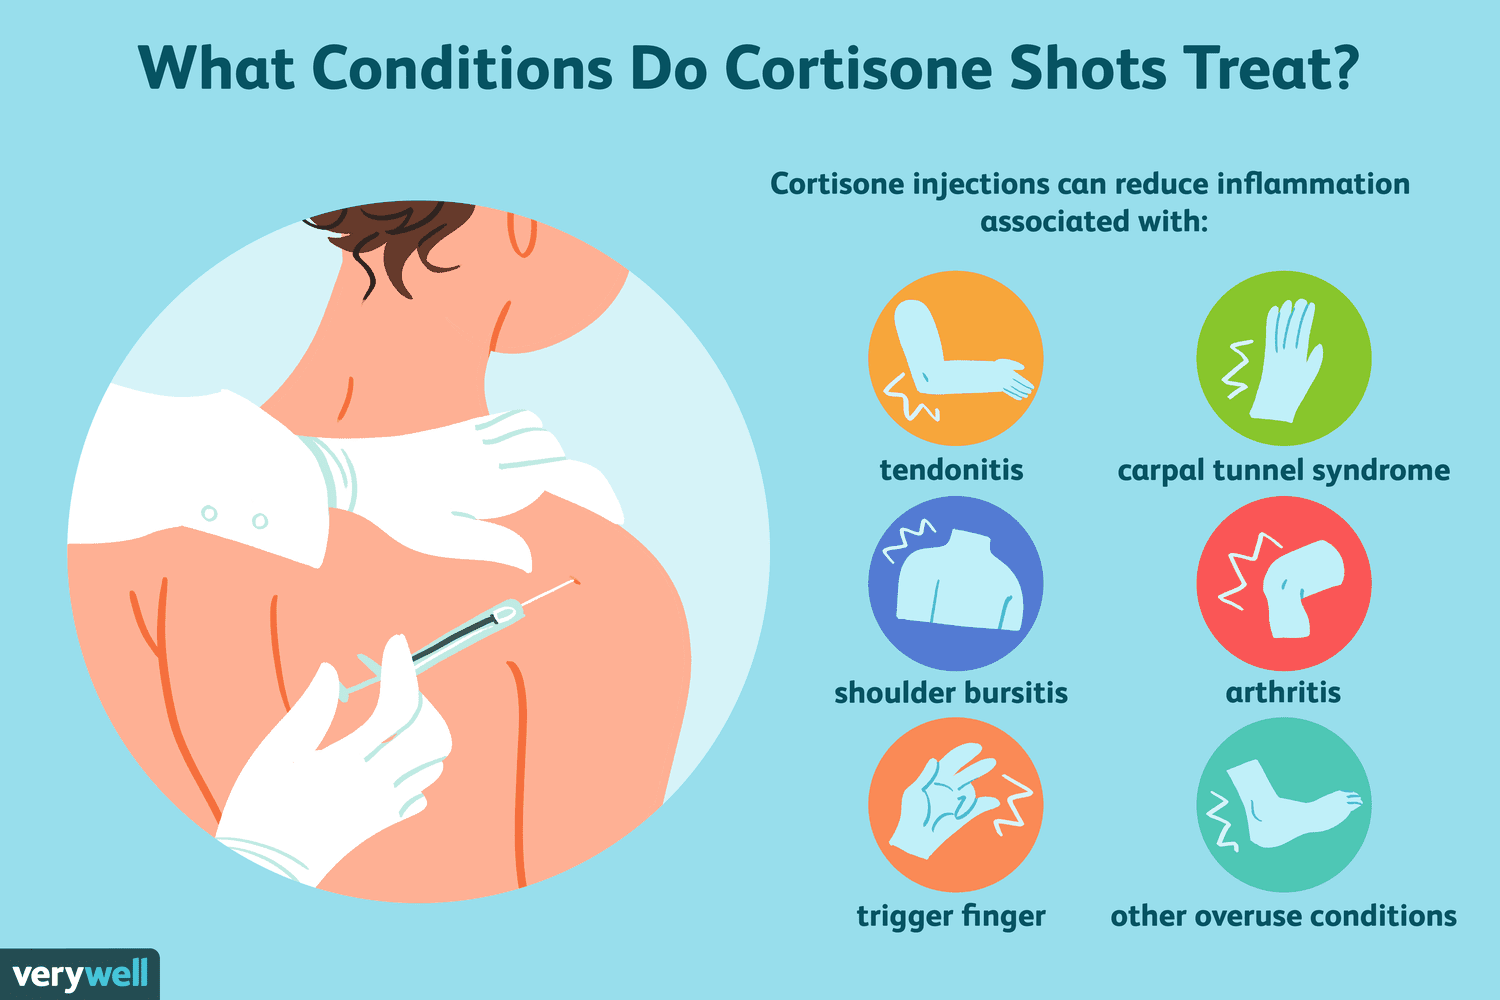 How Long Do Cortisone Shots Take to Kick In?